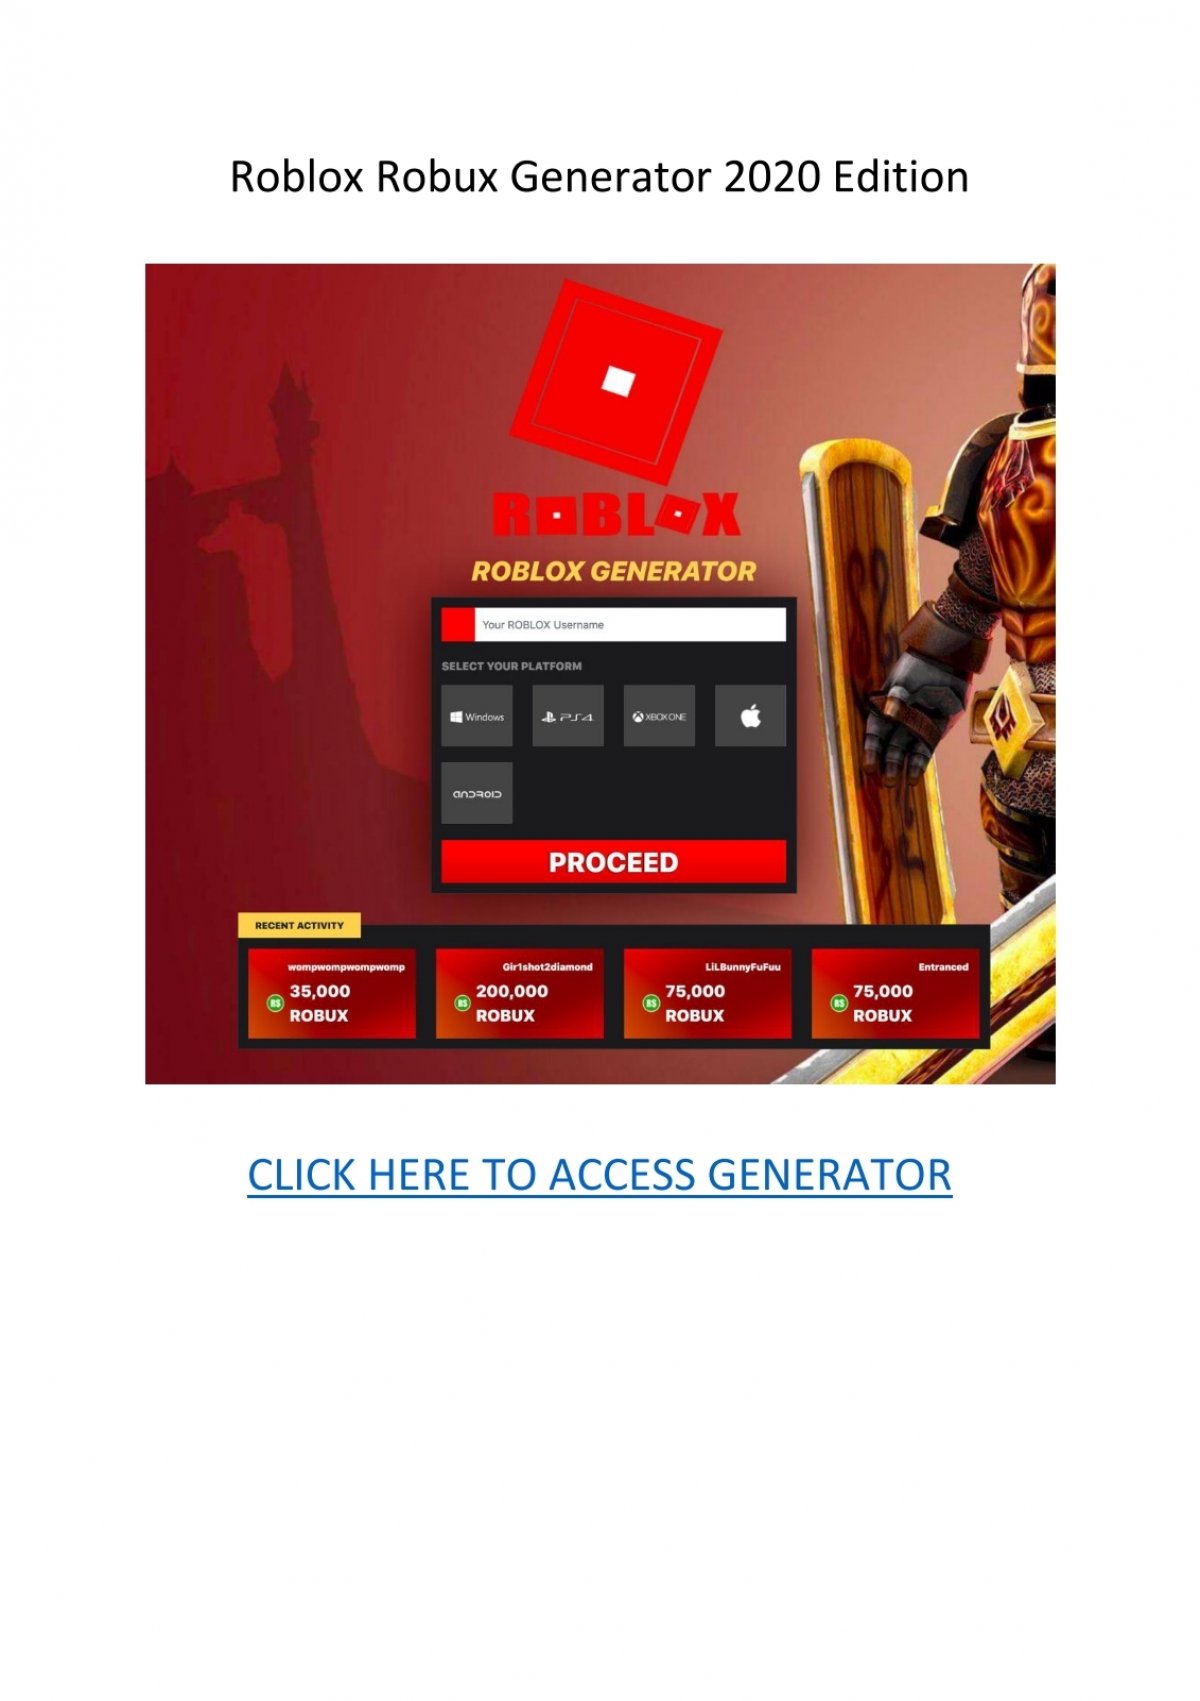 Free Robux Generator 2020 Roblox - robux generator roblox 2020